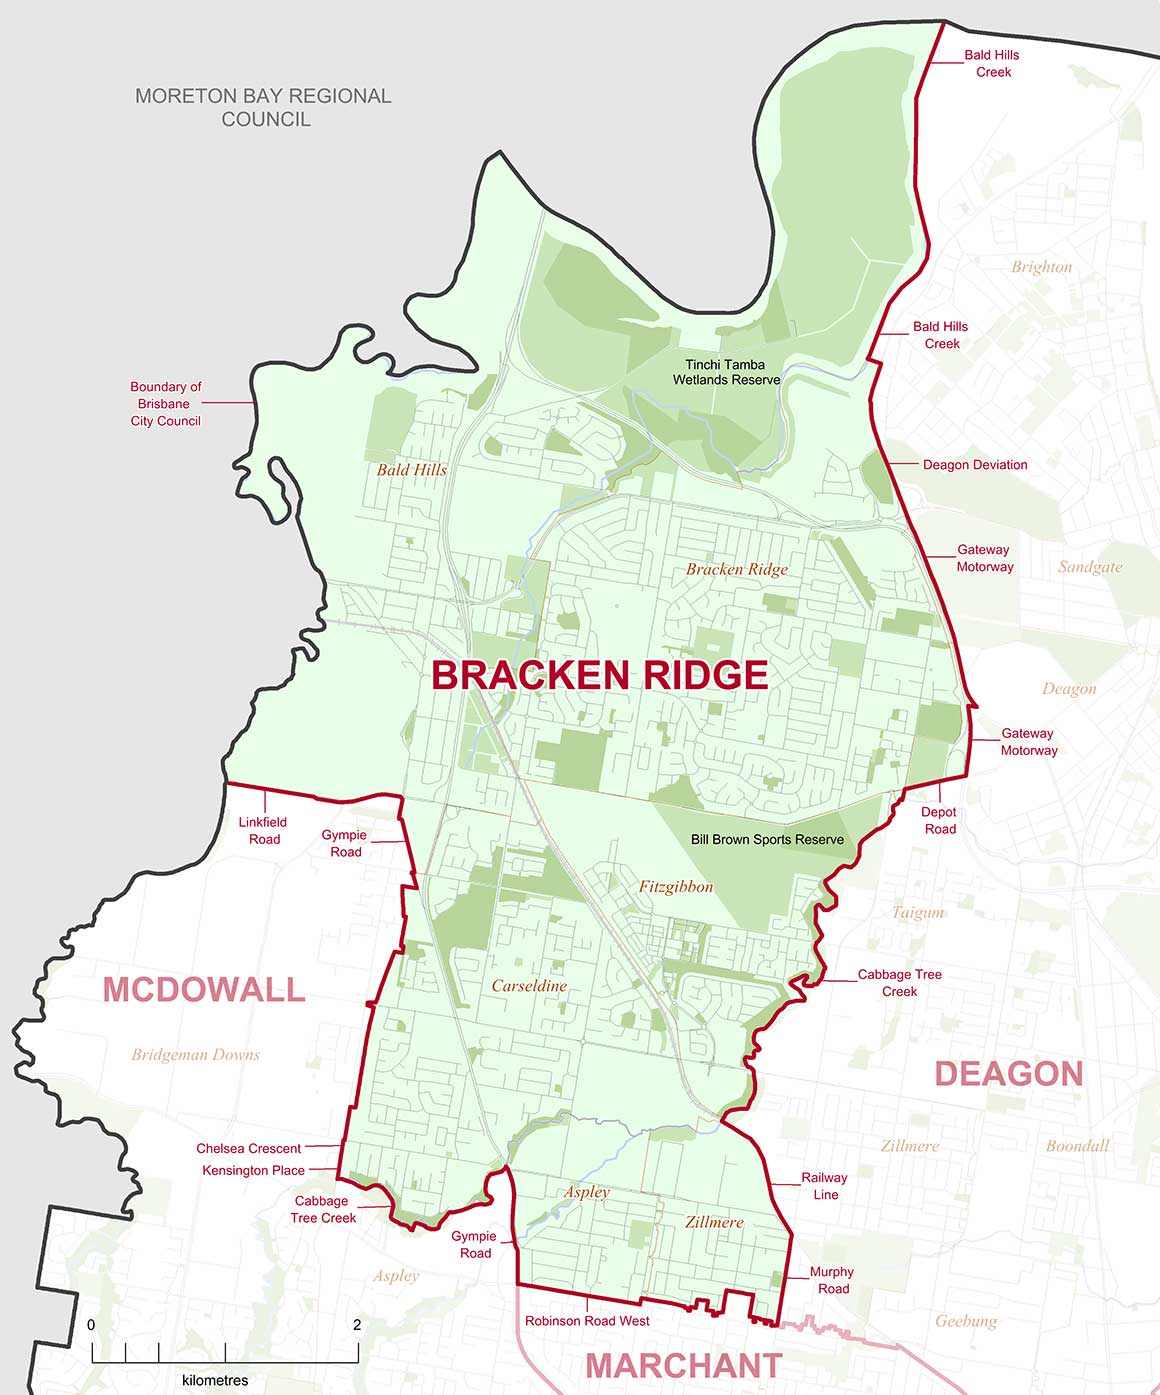 Map of Bracken Ridge Ward - incorporating Bracken Ridge, Bald Hills, Carseldine, Fitzgibbon, Aspley and Zillmere